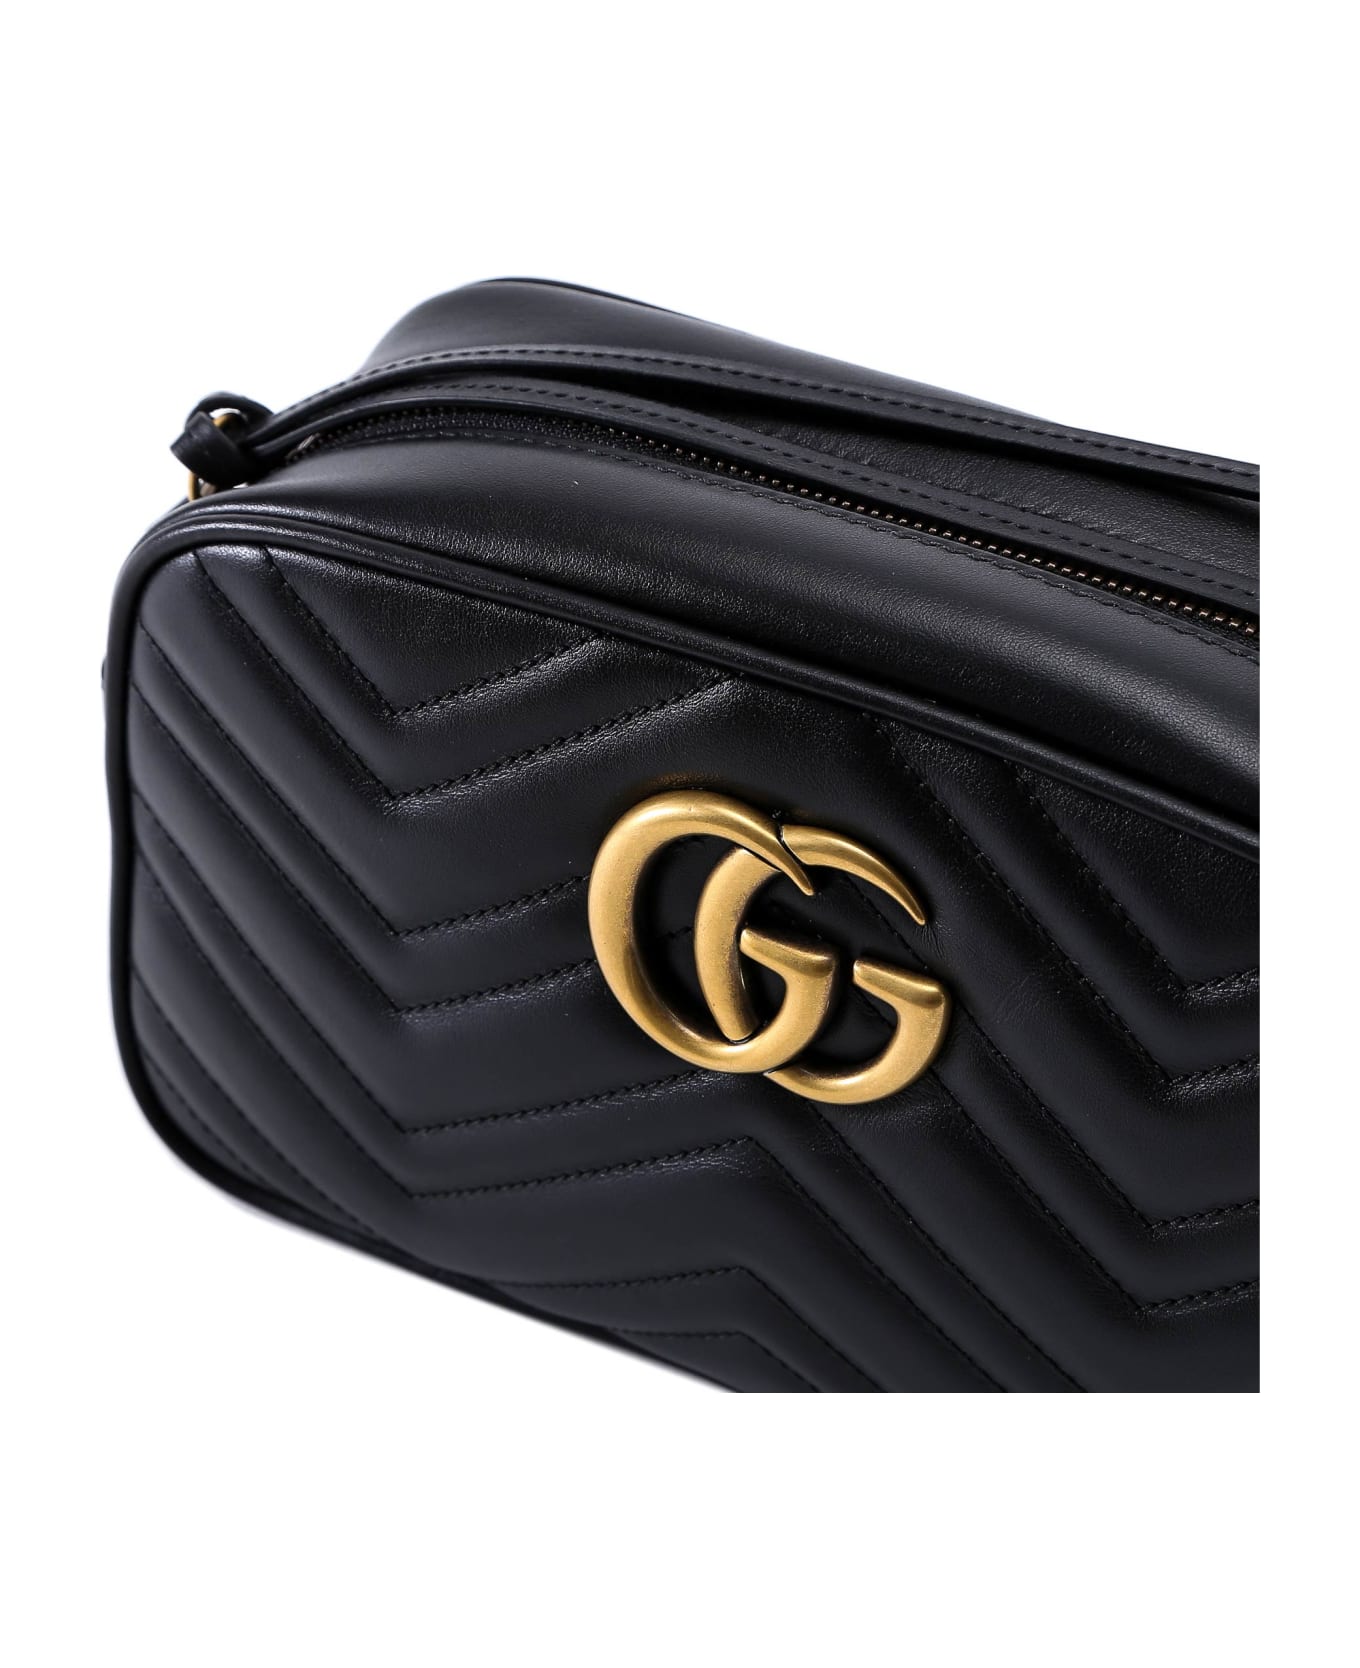 Gucci Gg Marmont Shoulder Bag - Nero ショルダーバッグ